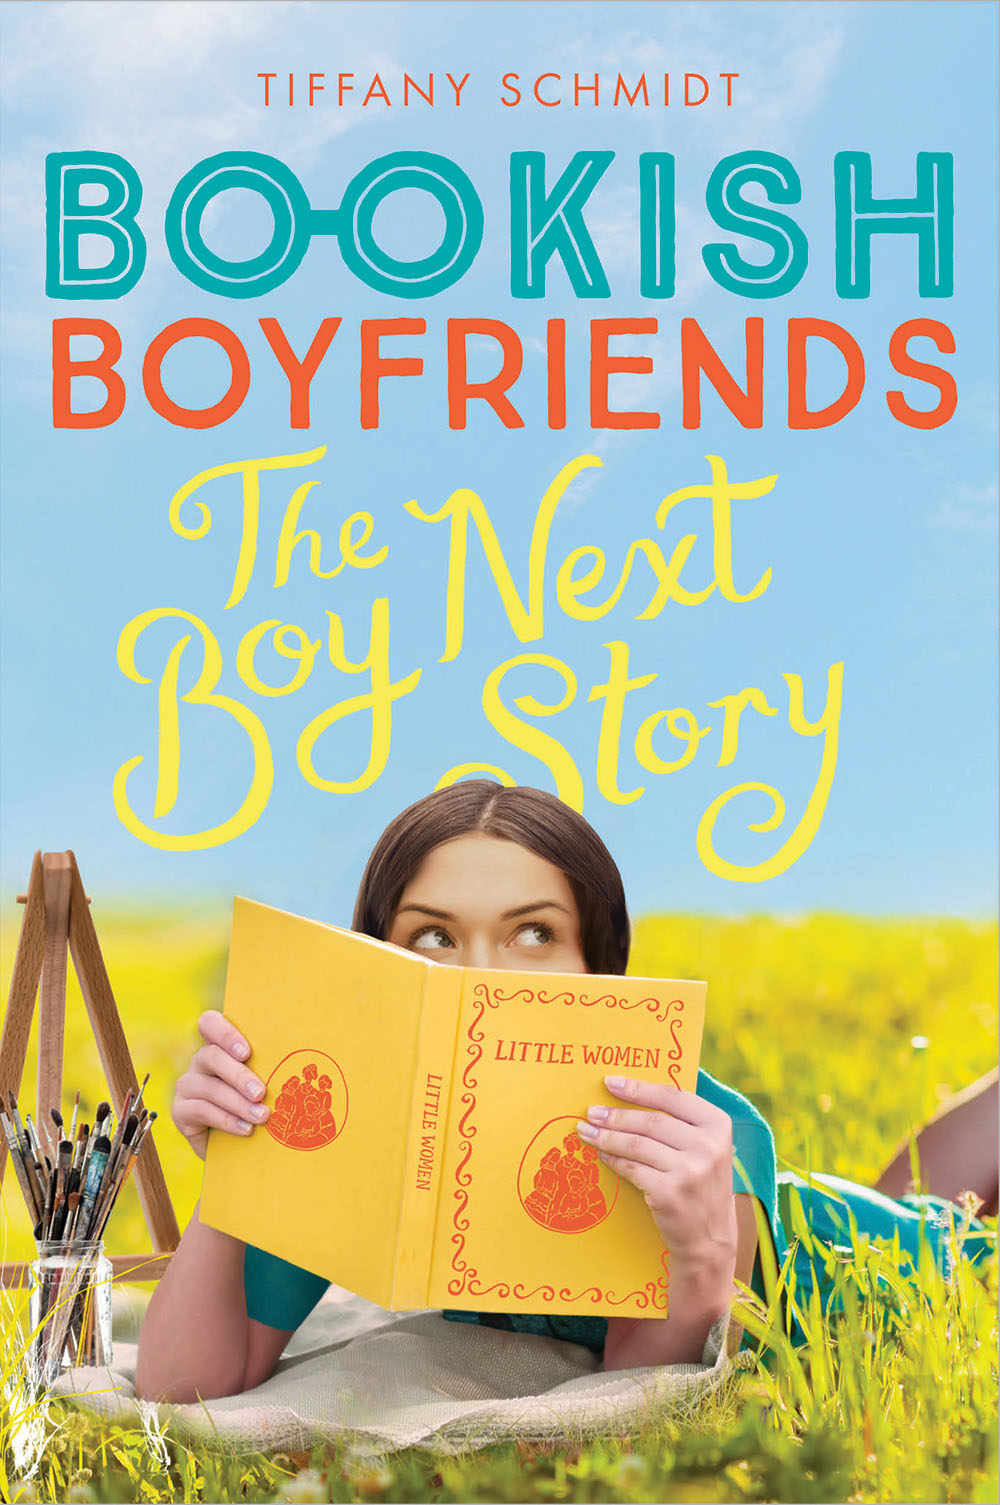 The Boy Next Story (Bookish Boyfriends, #2)